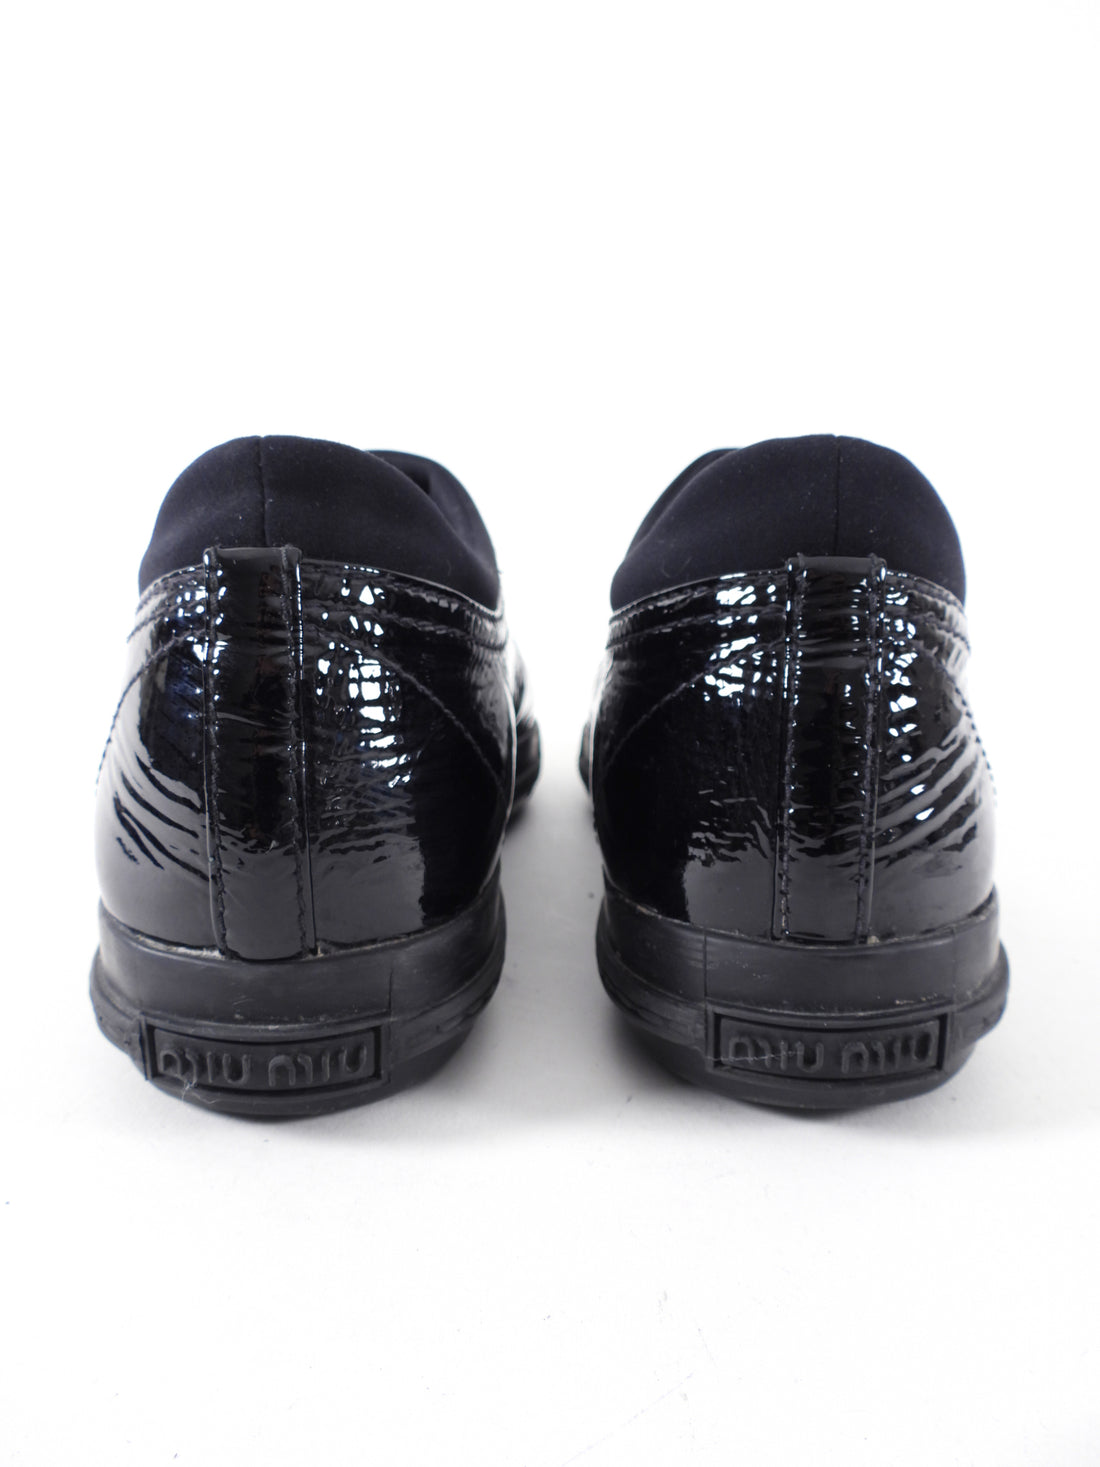 Miu Miu Black Patent Metal Jewel Toe Sneakers